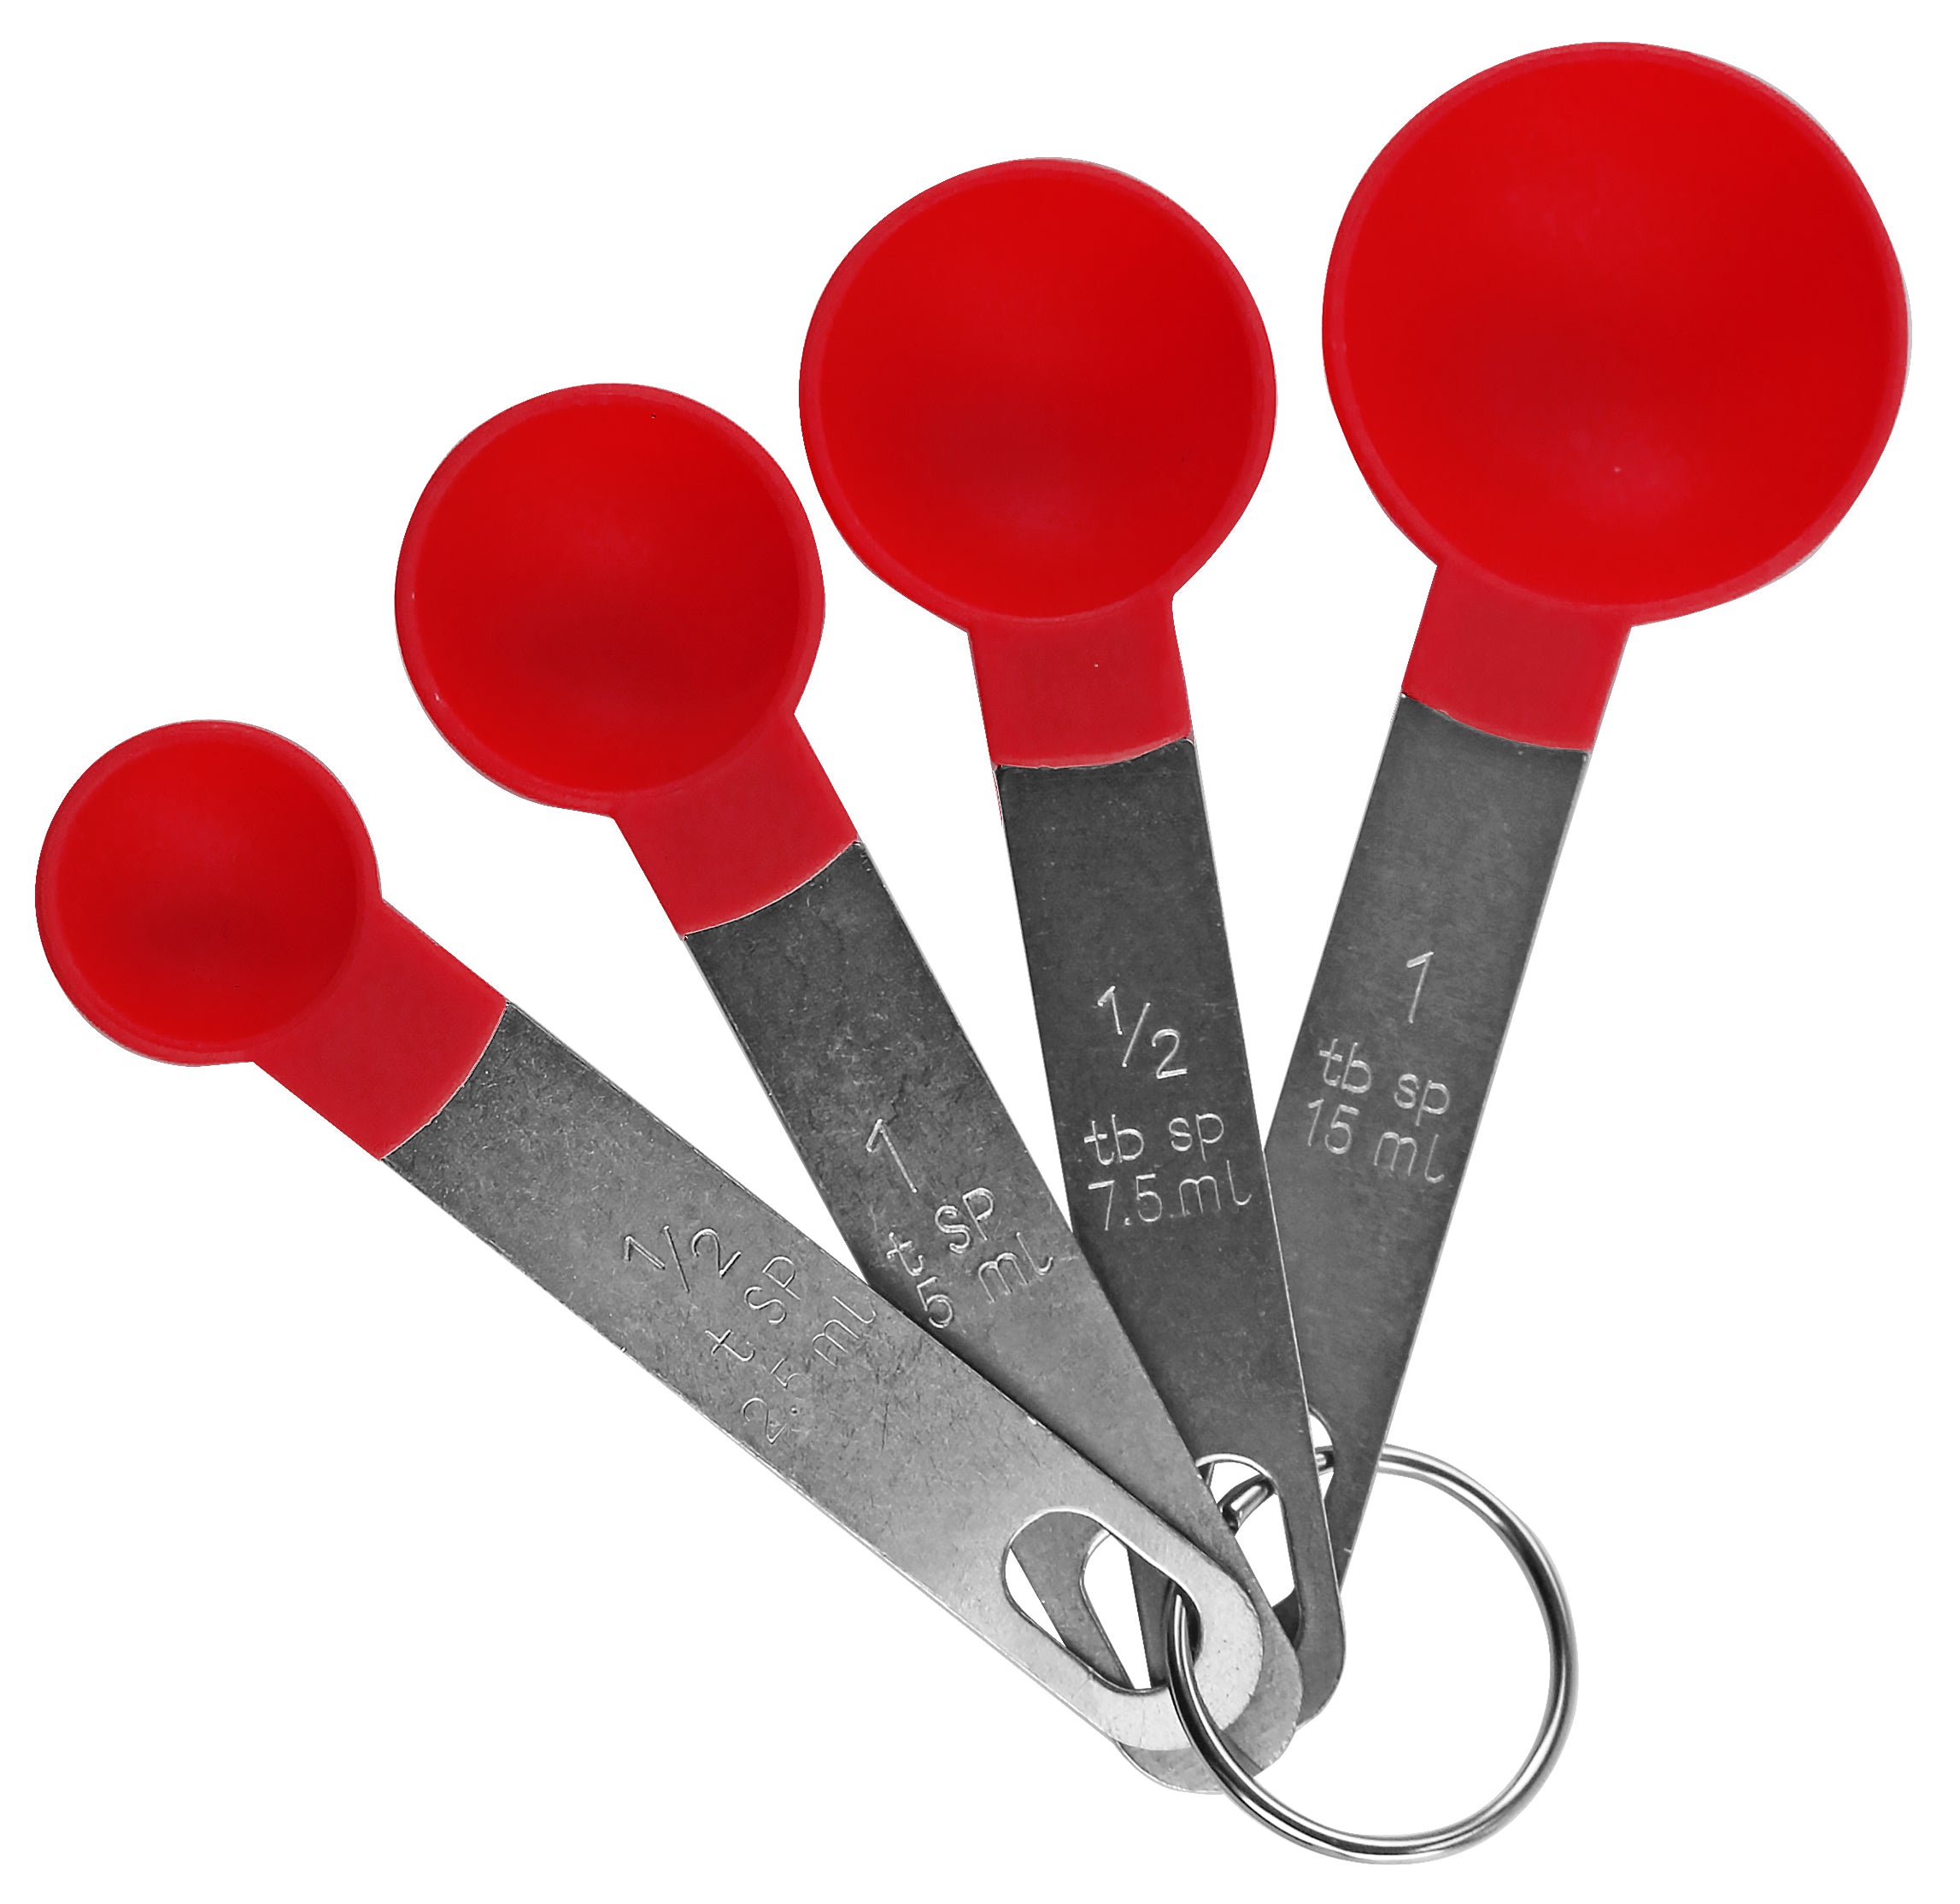 4pc Measuring Spoon Set, Turquoise – Reston Lloyd